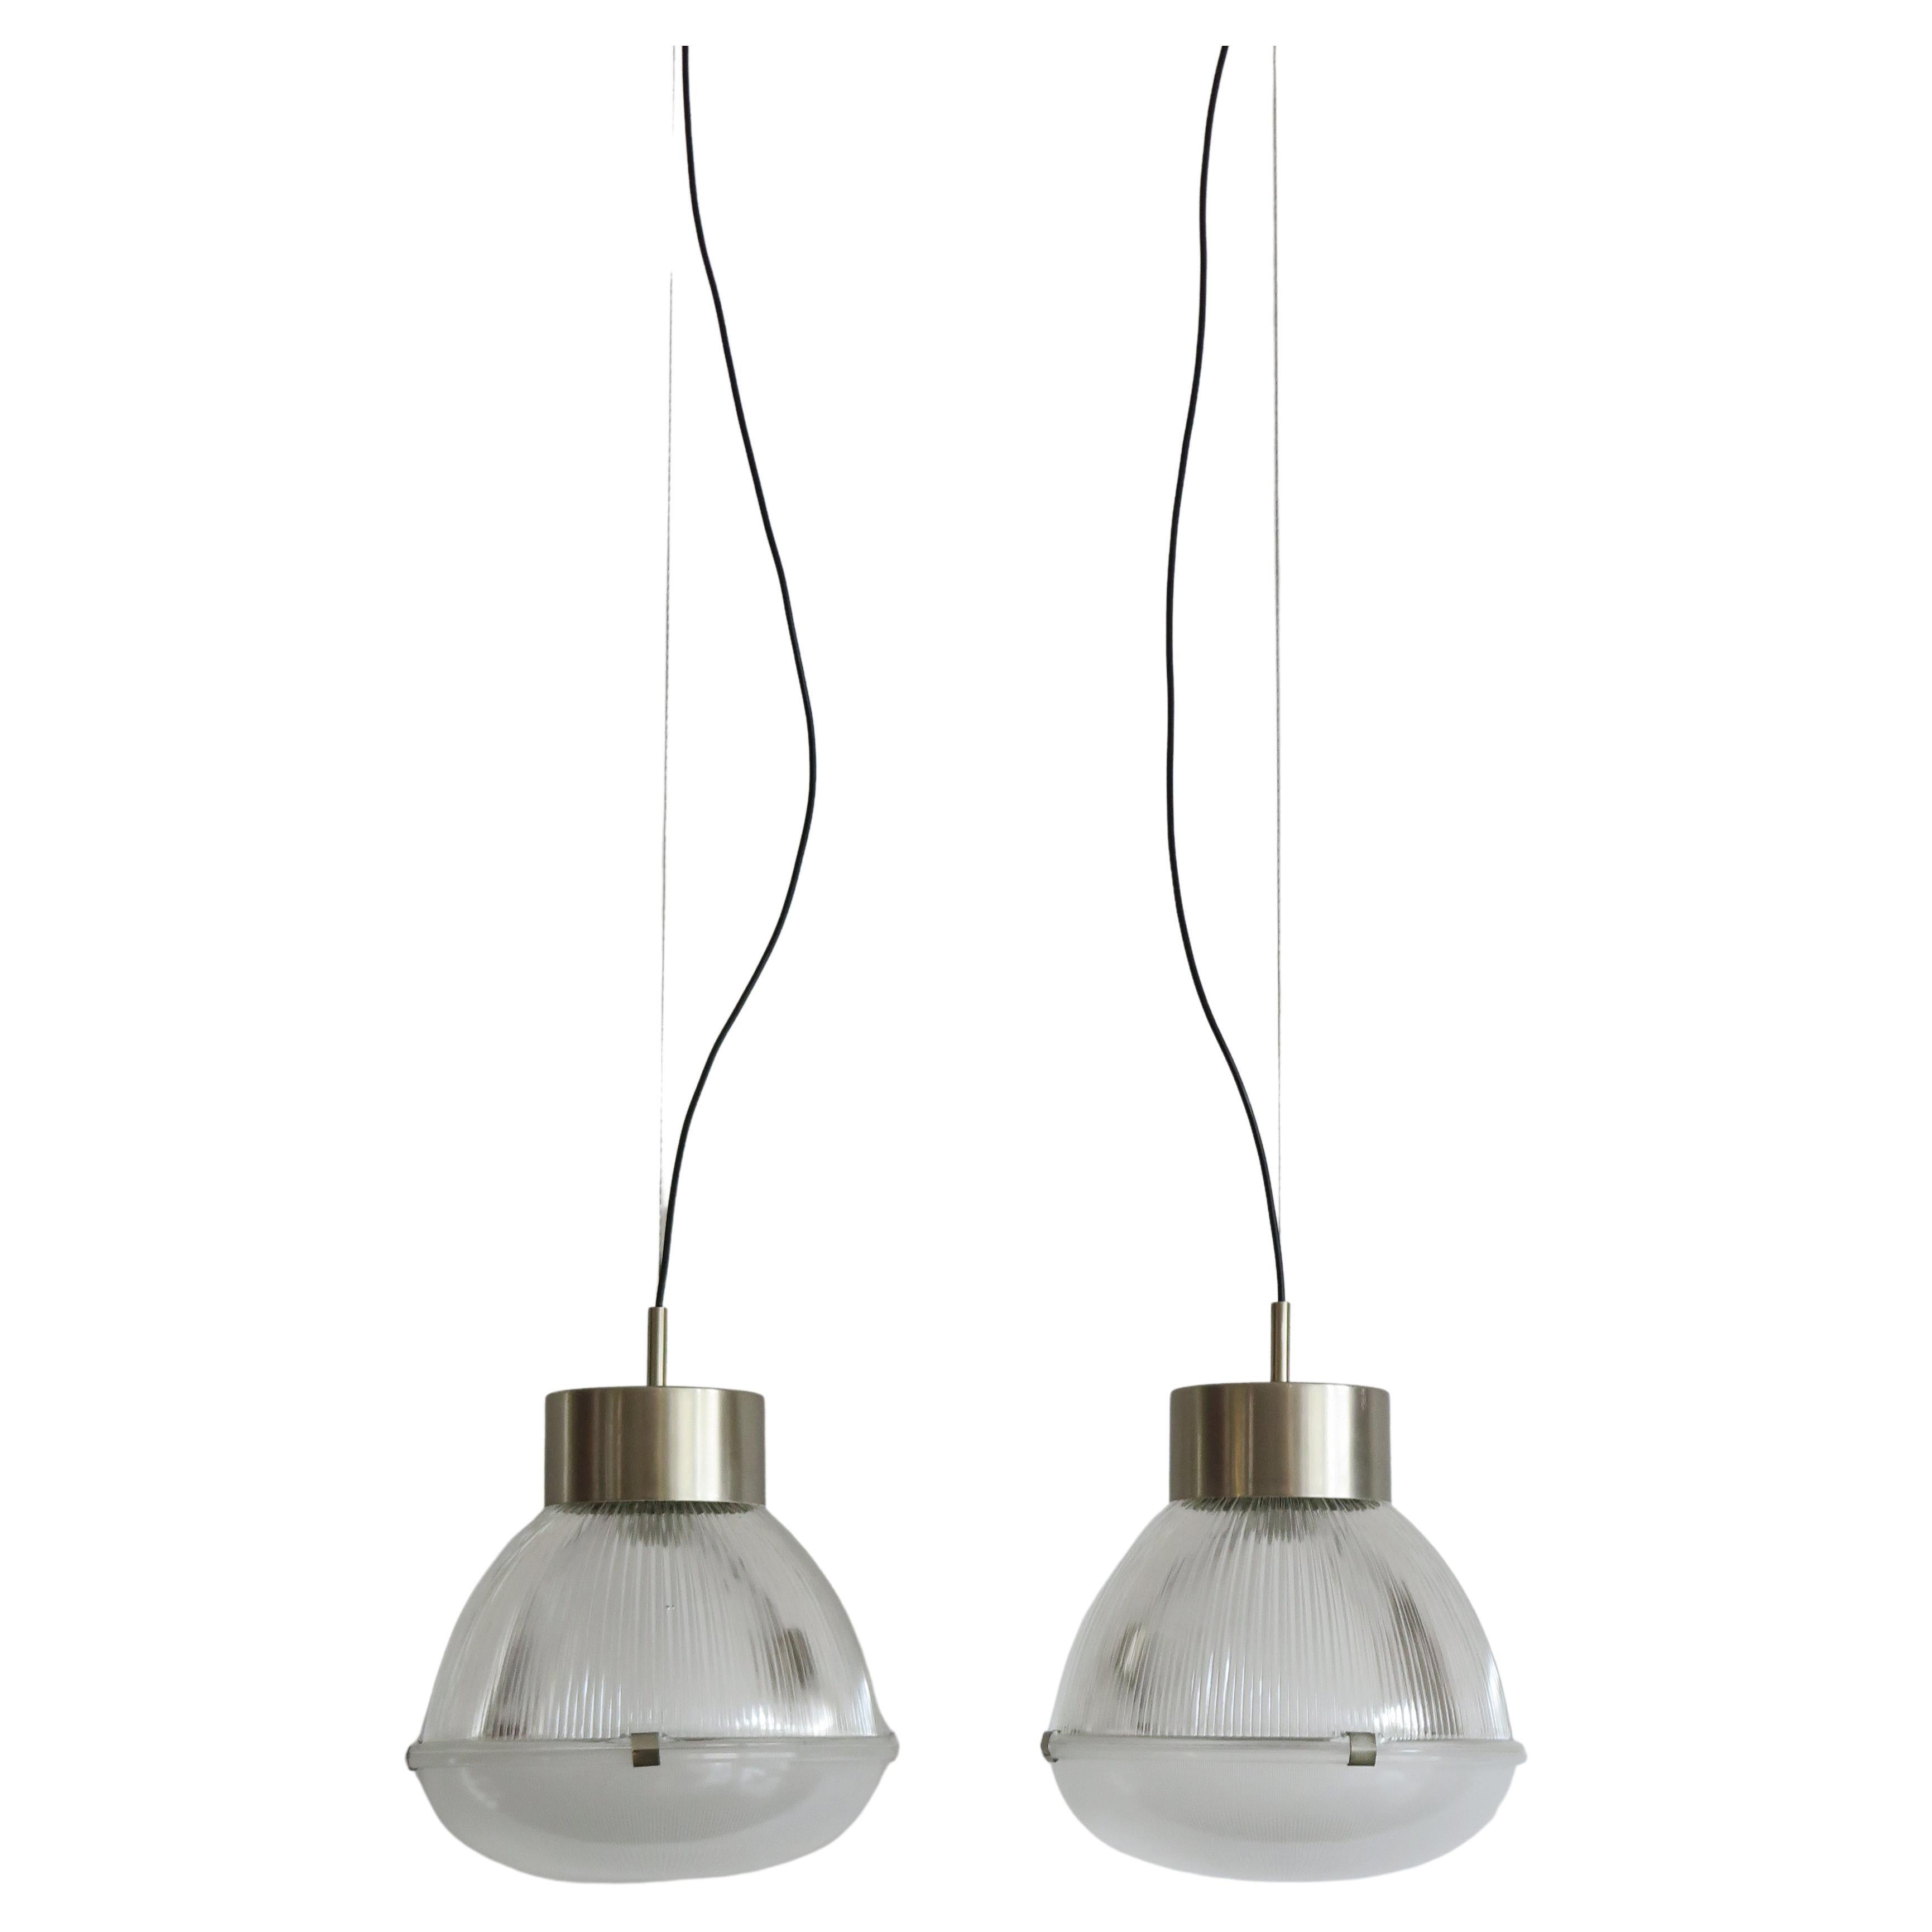 Tito Agnoli Italian Mid-Century Glass Pendant Lamps for Oluce, 1959